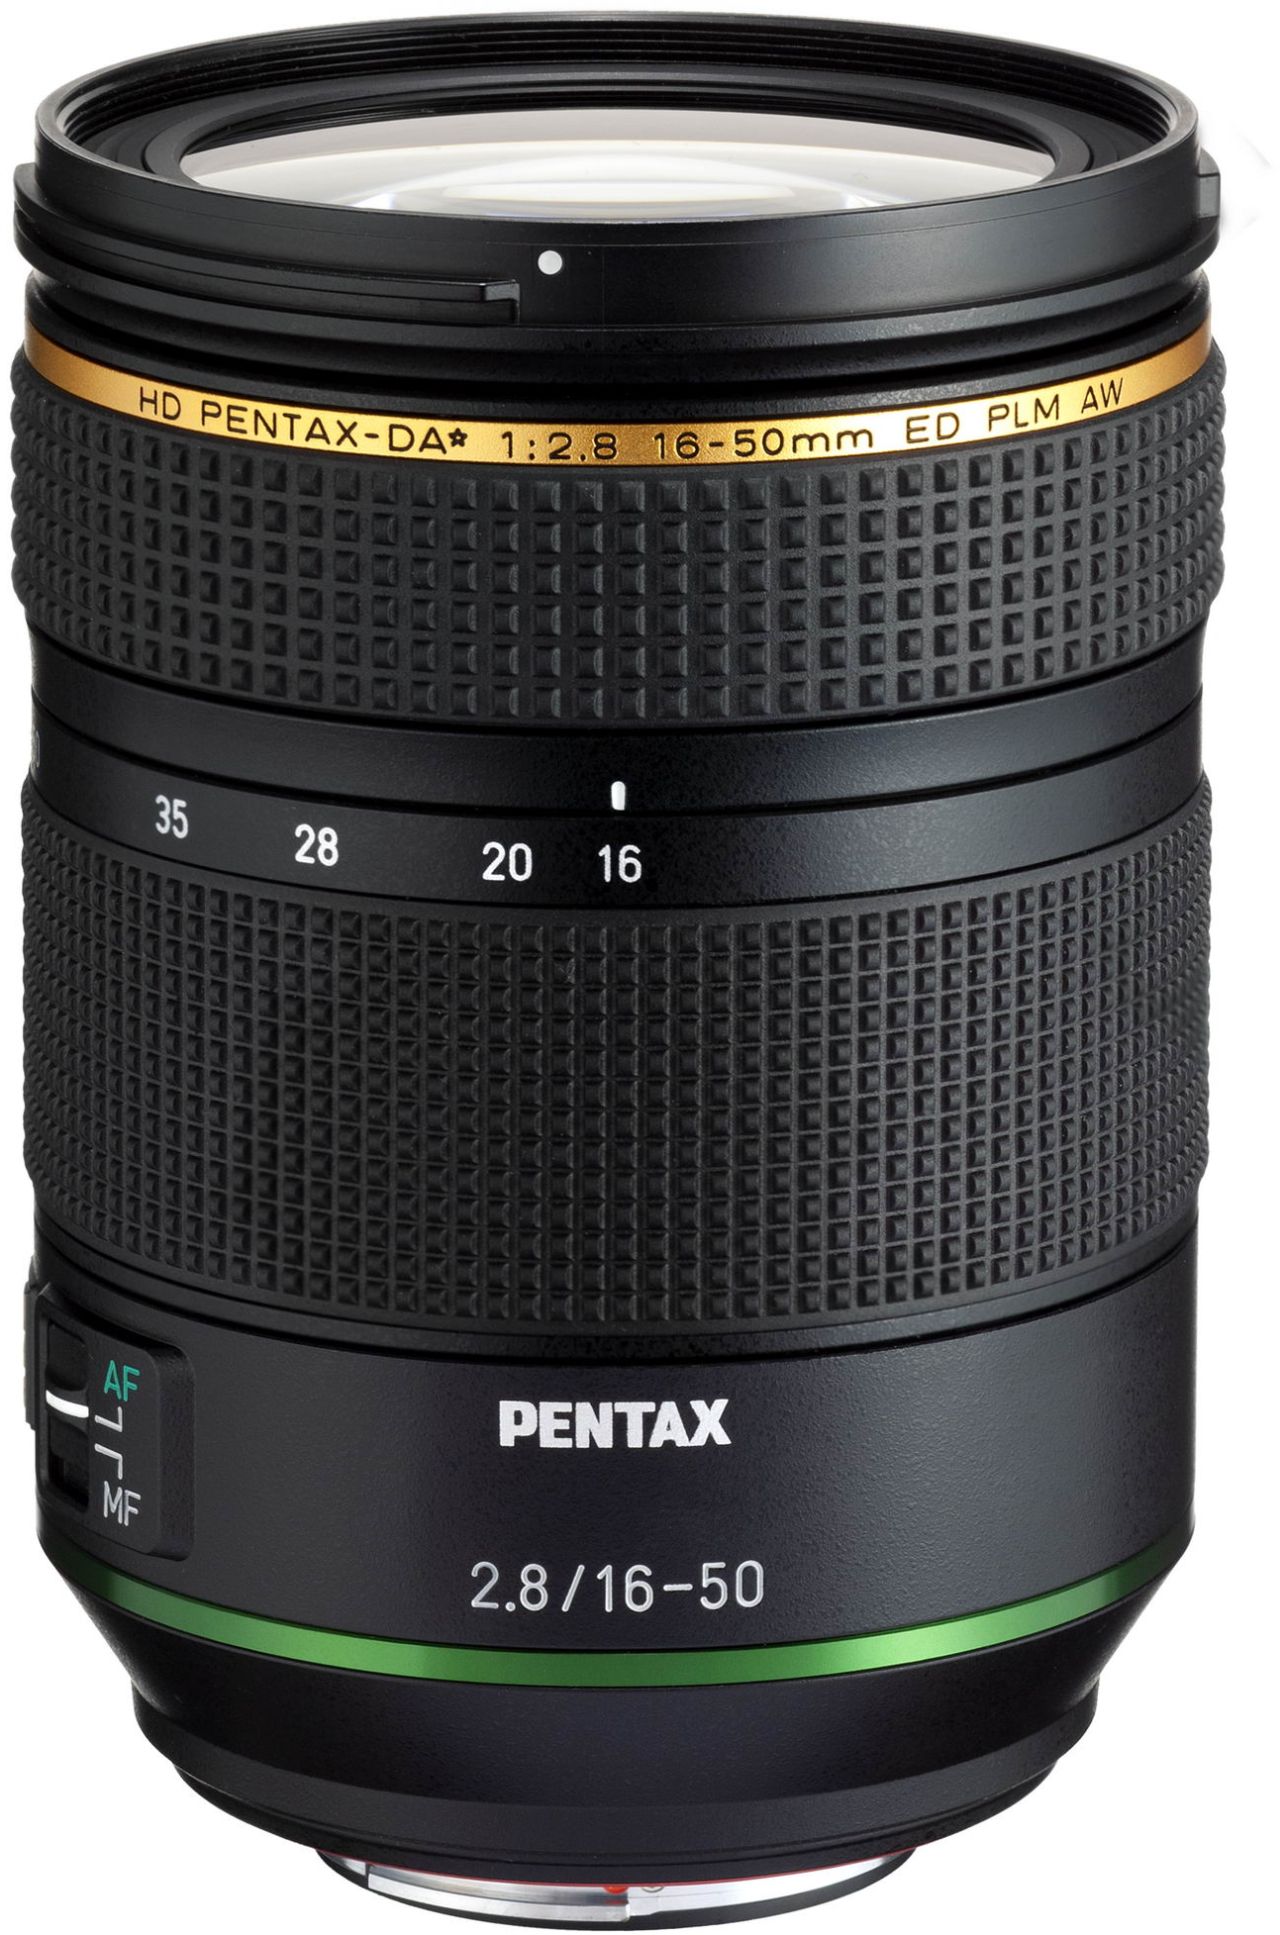 Pentax HD DA 16-50mm f2.8 ED PLM AW - Foto Erhardt